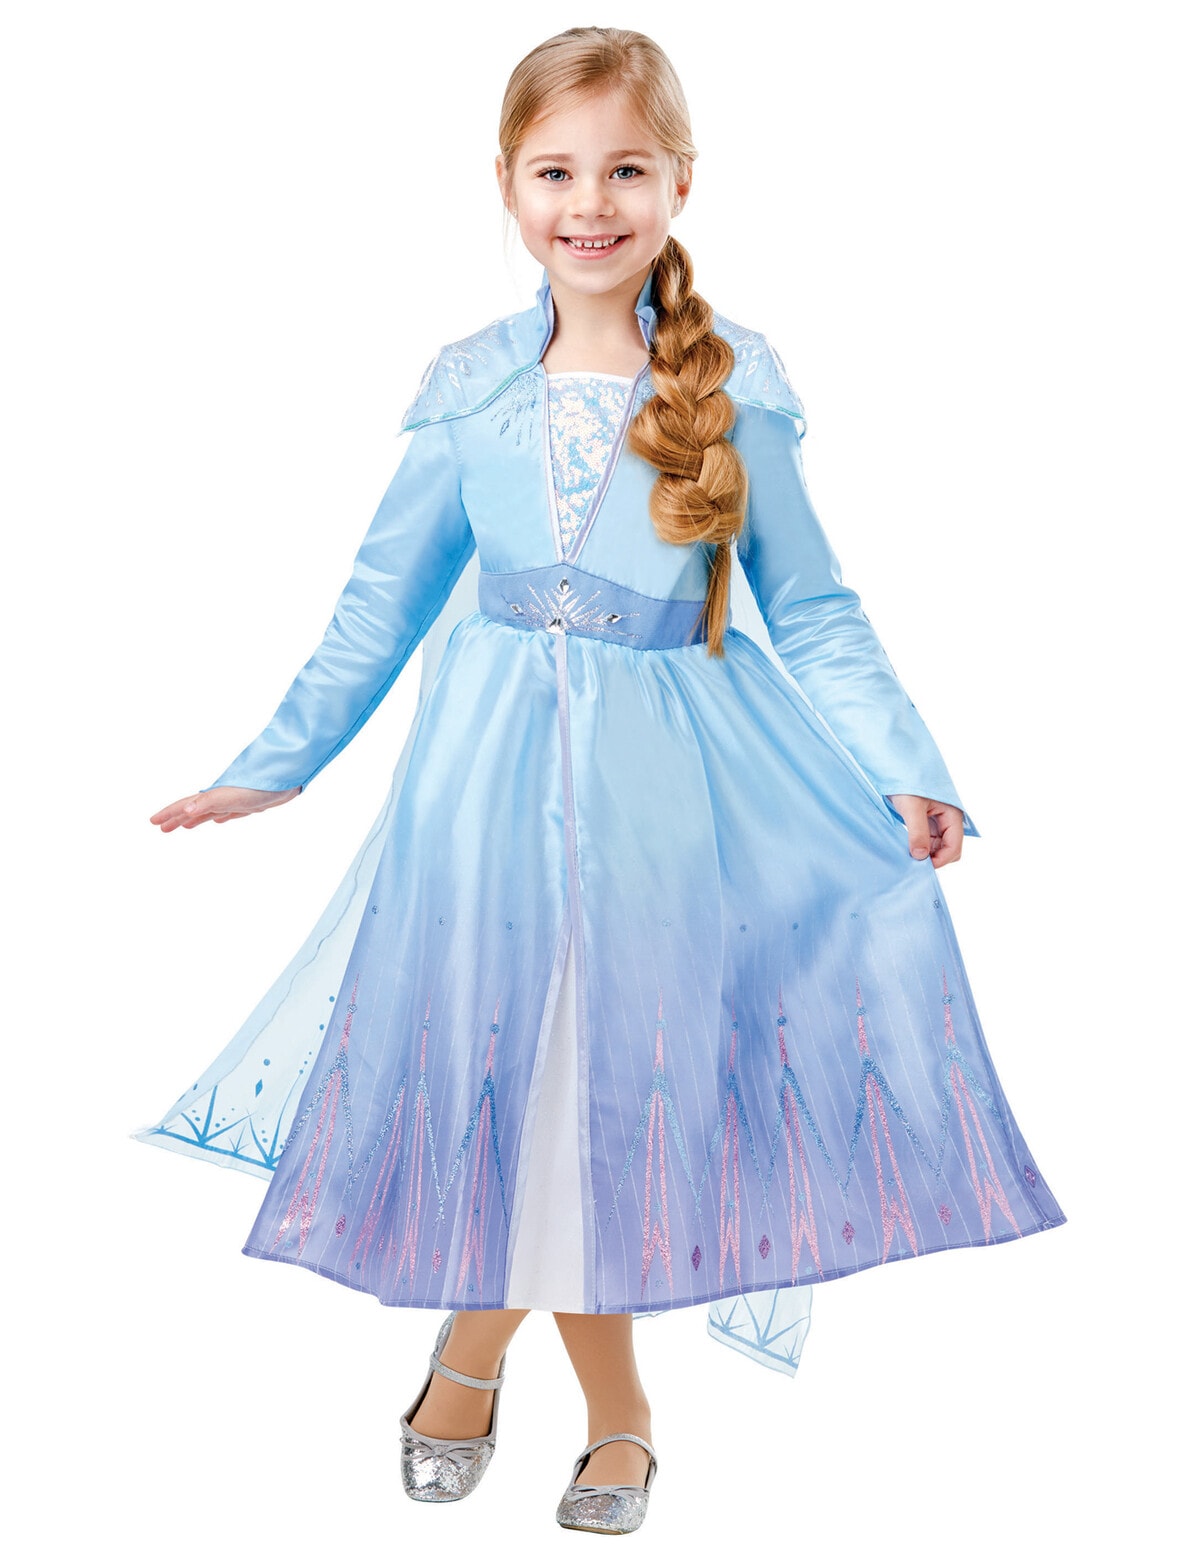 Frozen 2 (2019) Scene: Elsa's Dress Transformation - YouTube